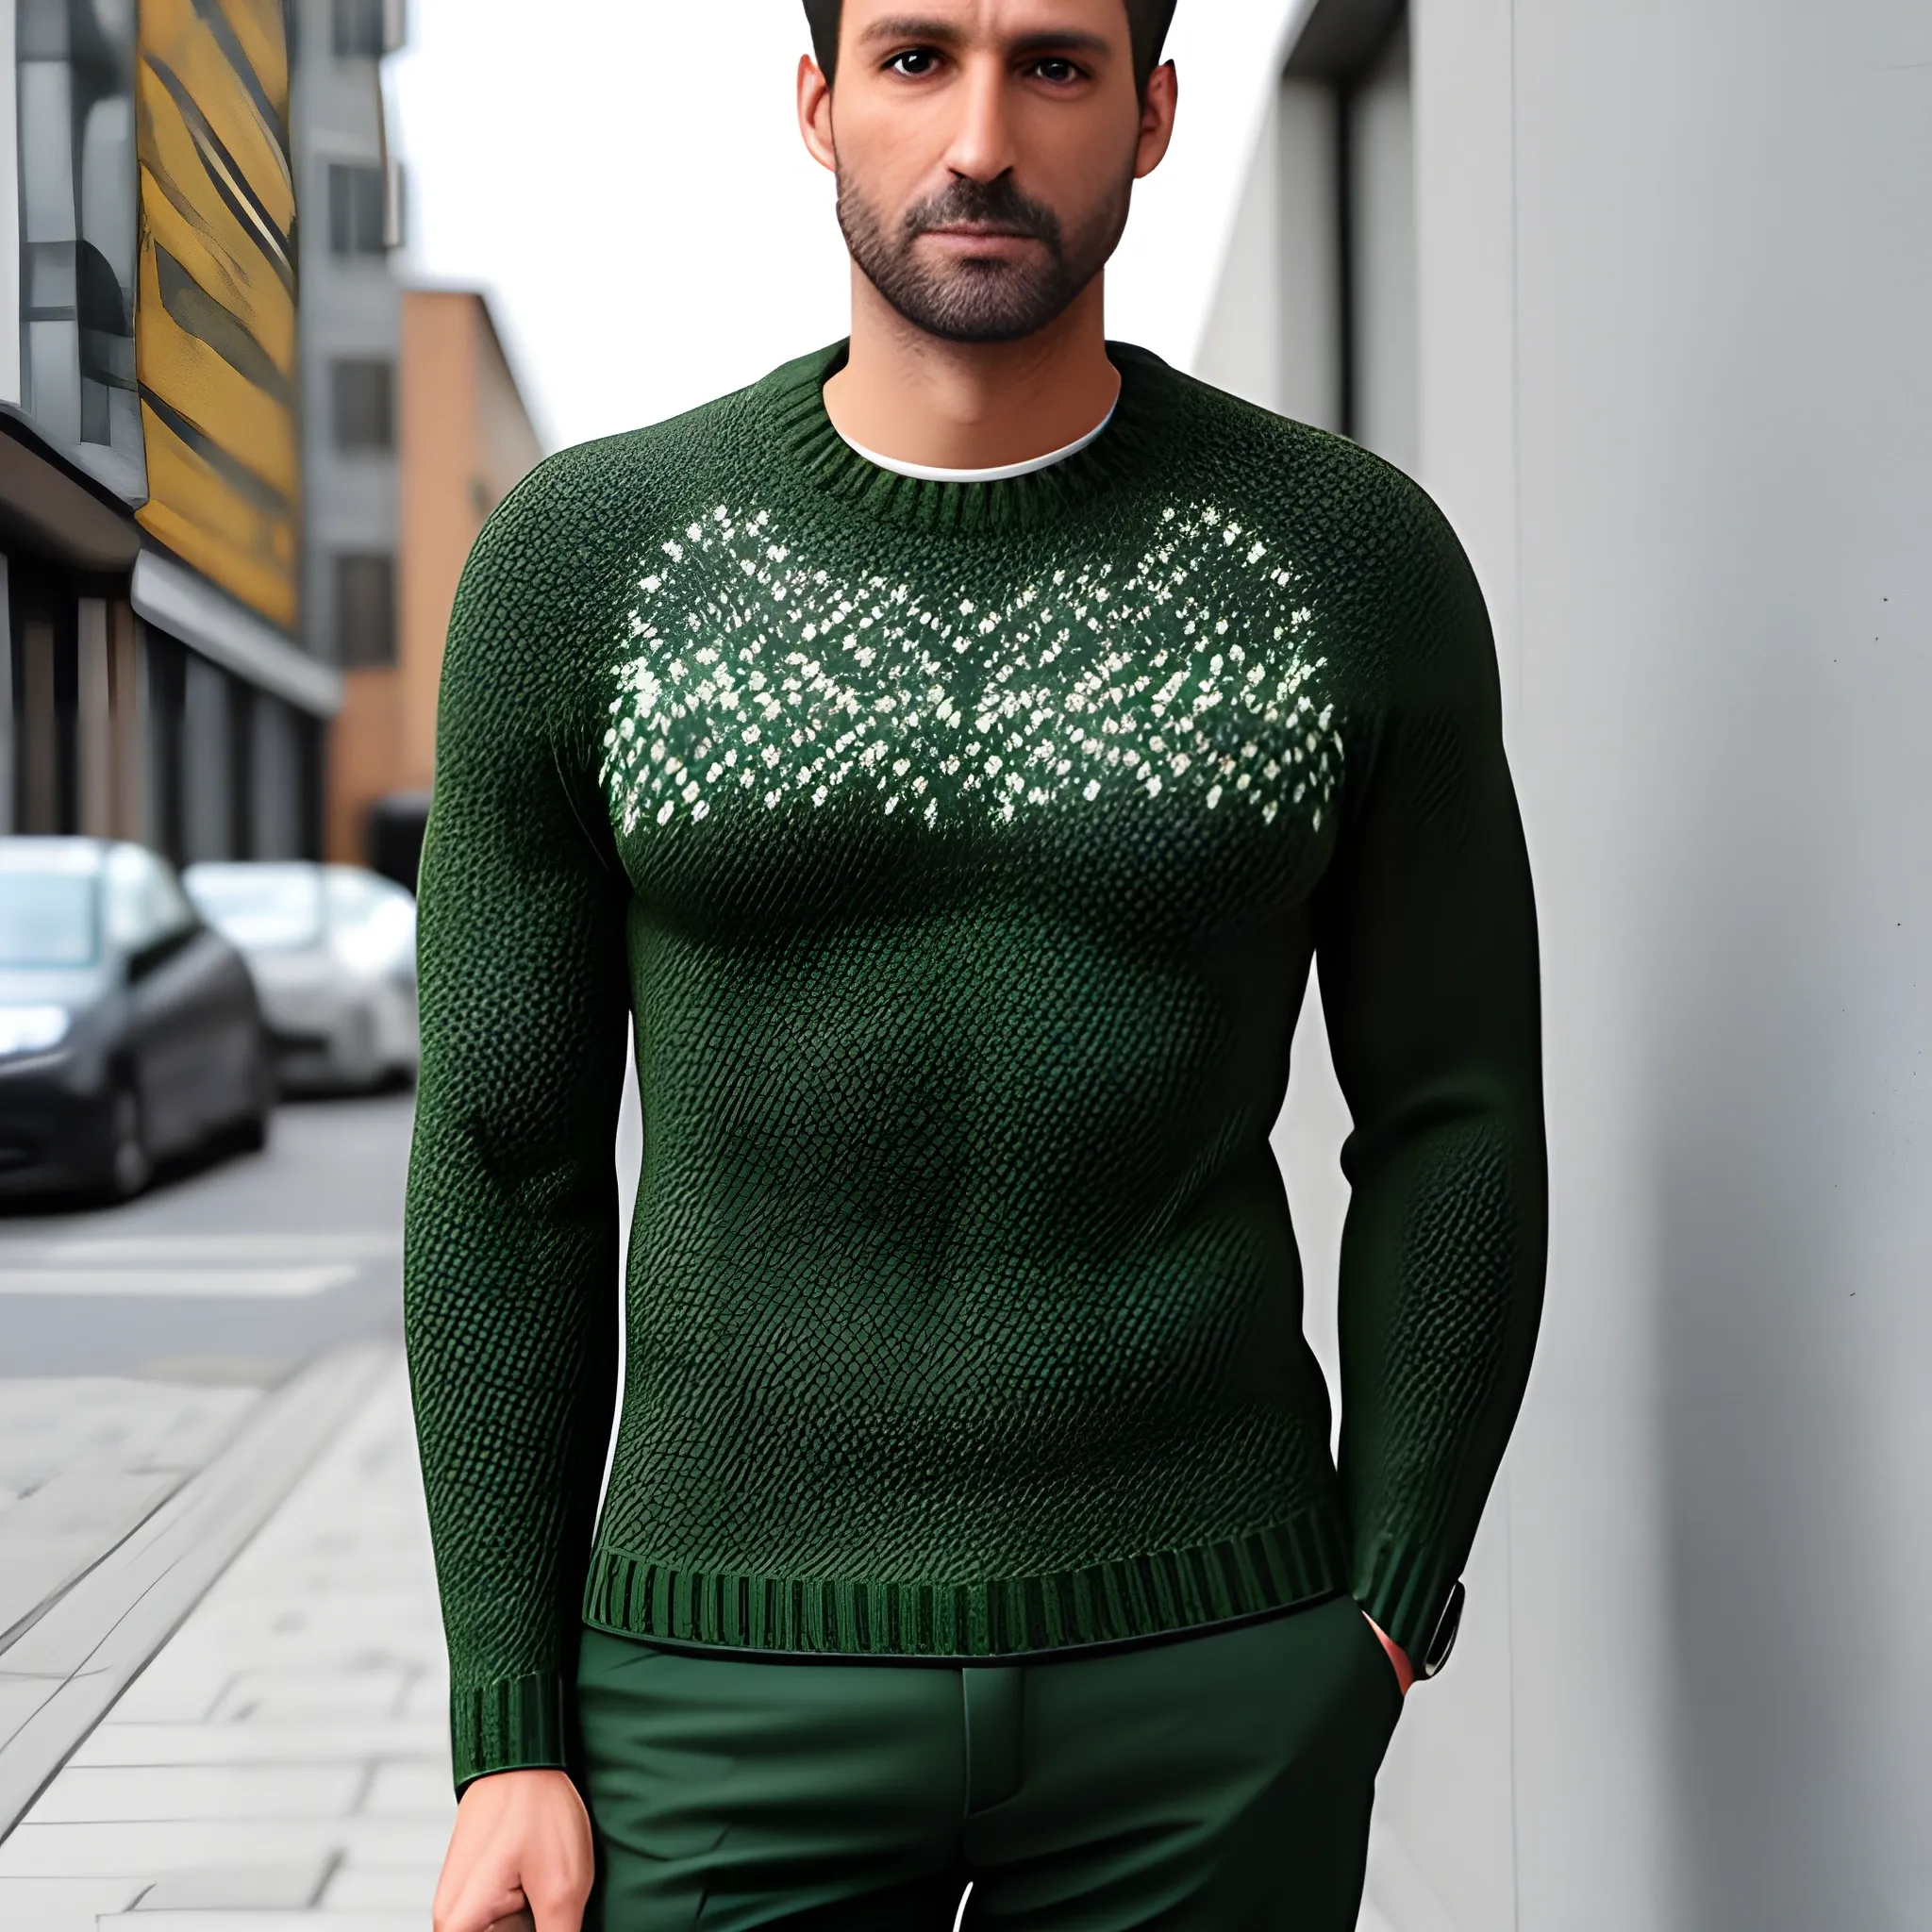 child in green knit sweater standing on sidewalk
